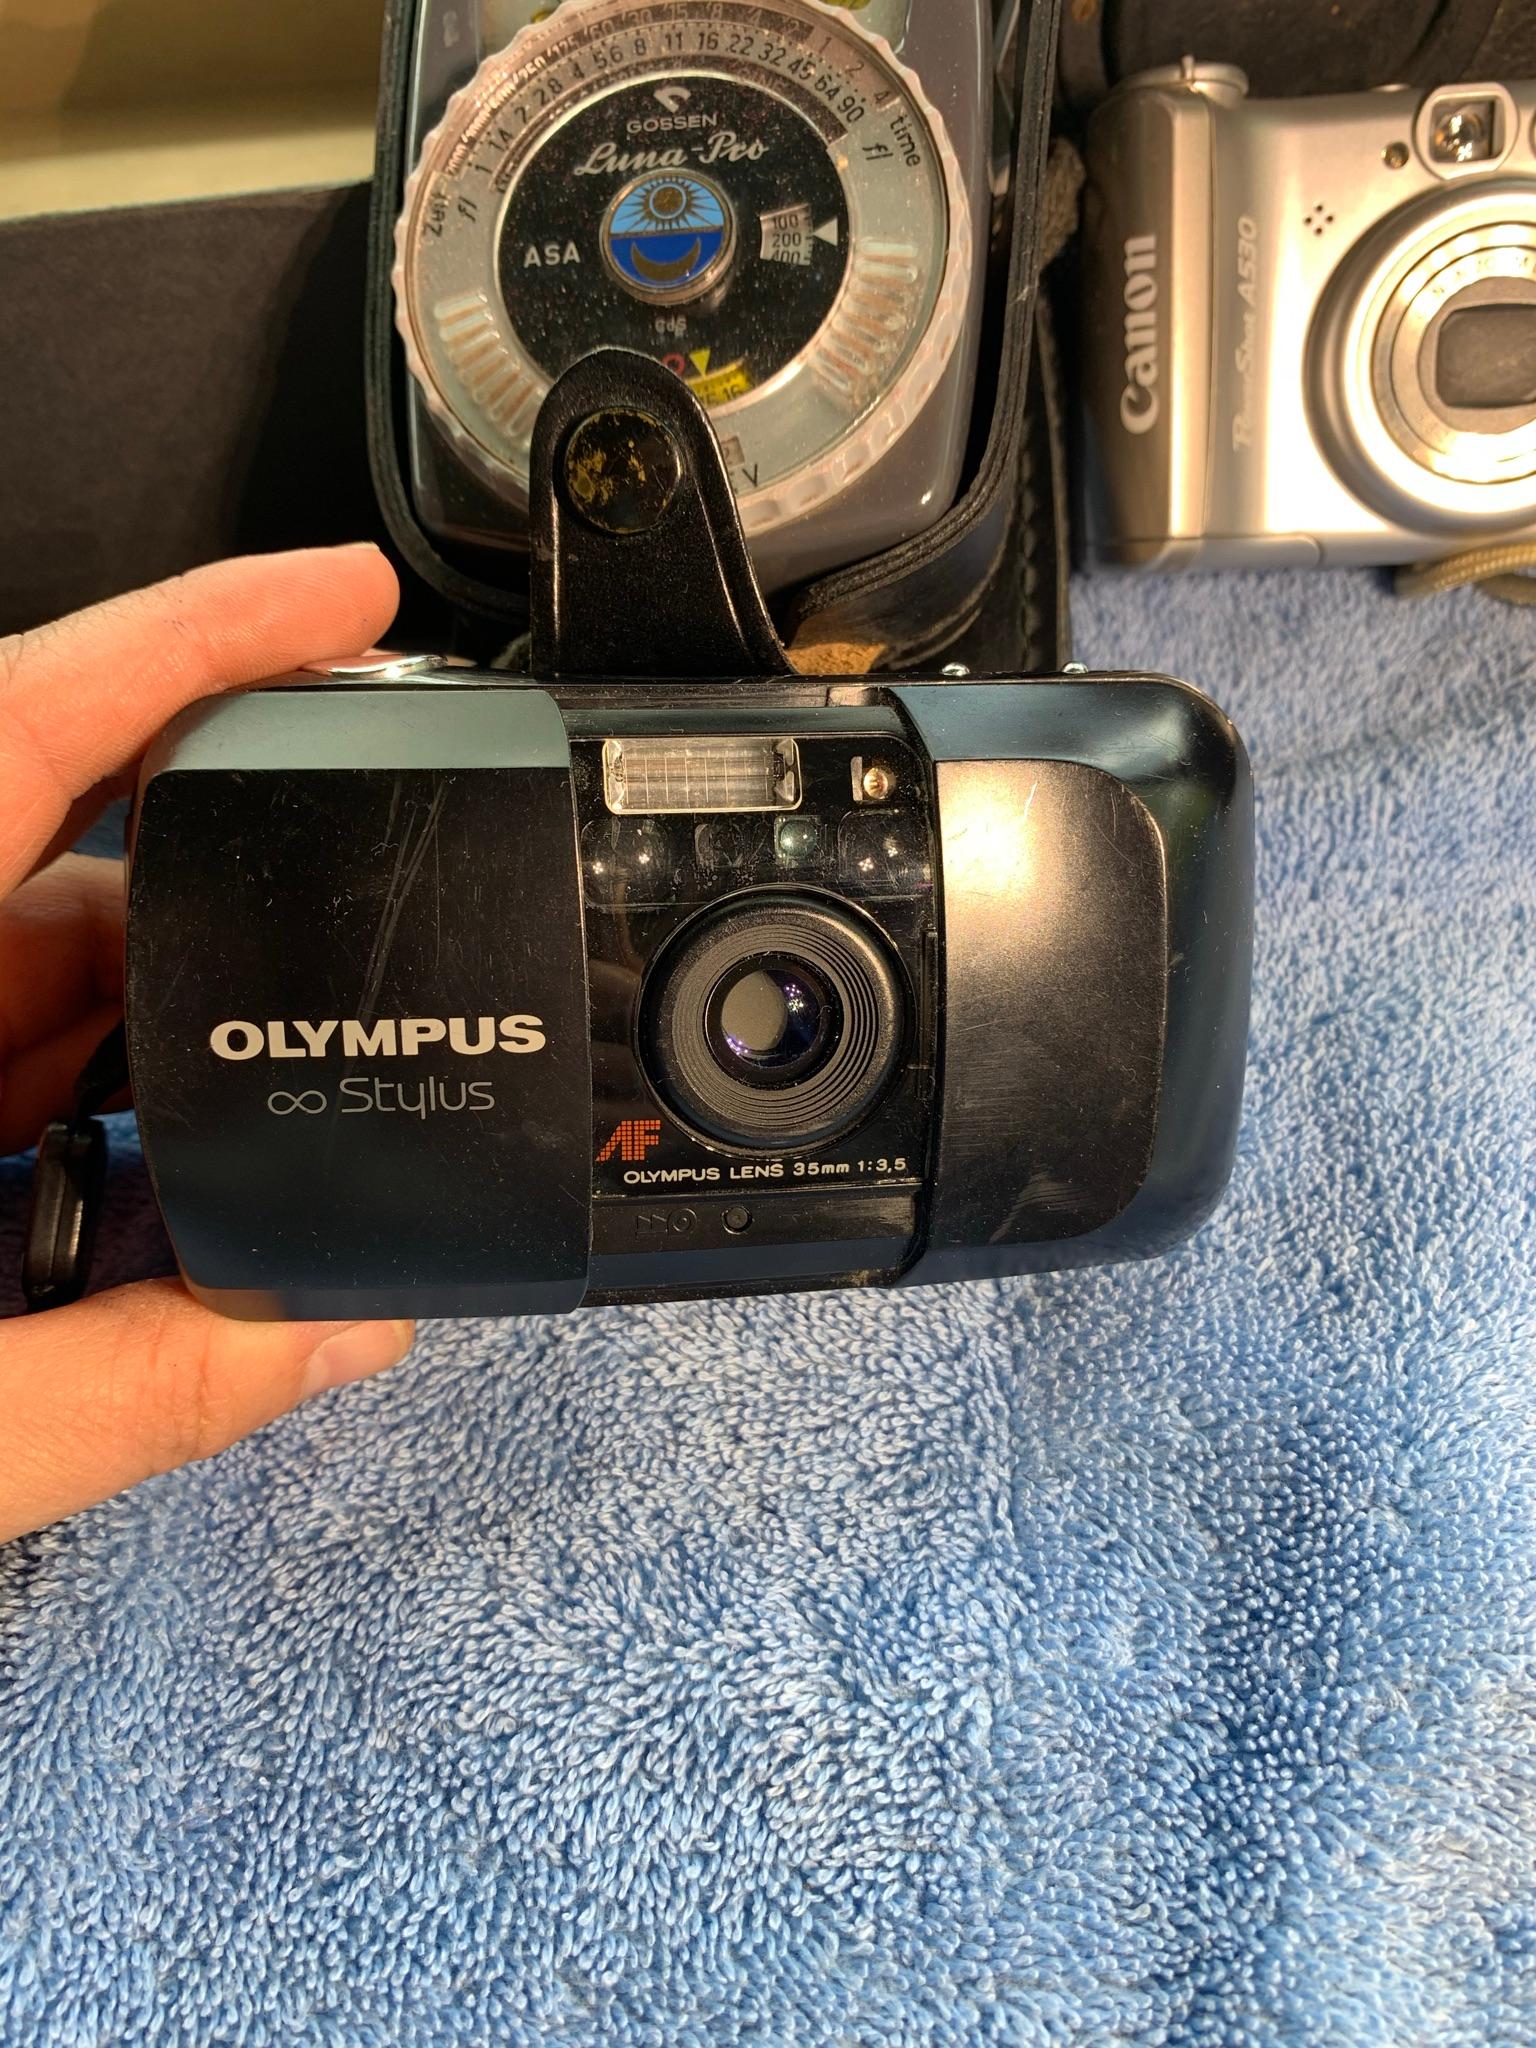 Camera Group - Olympus Stylus, Olympus 35 RC, Gossen Luna - Pro Meter, Canon Camera, & More